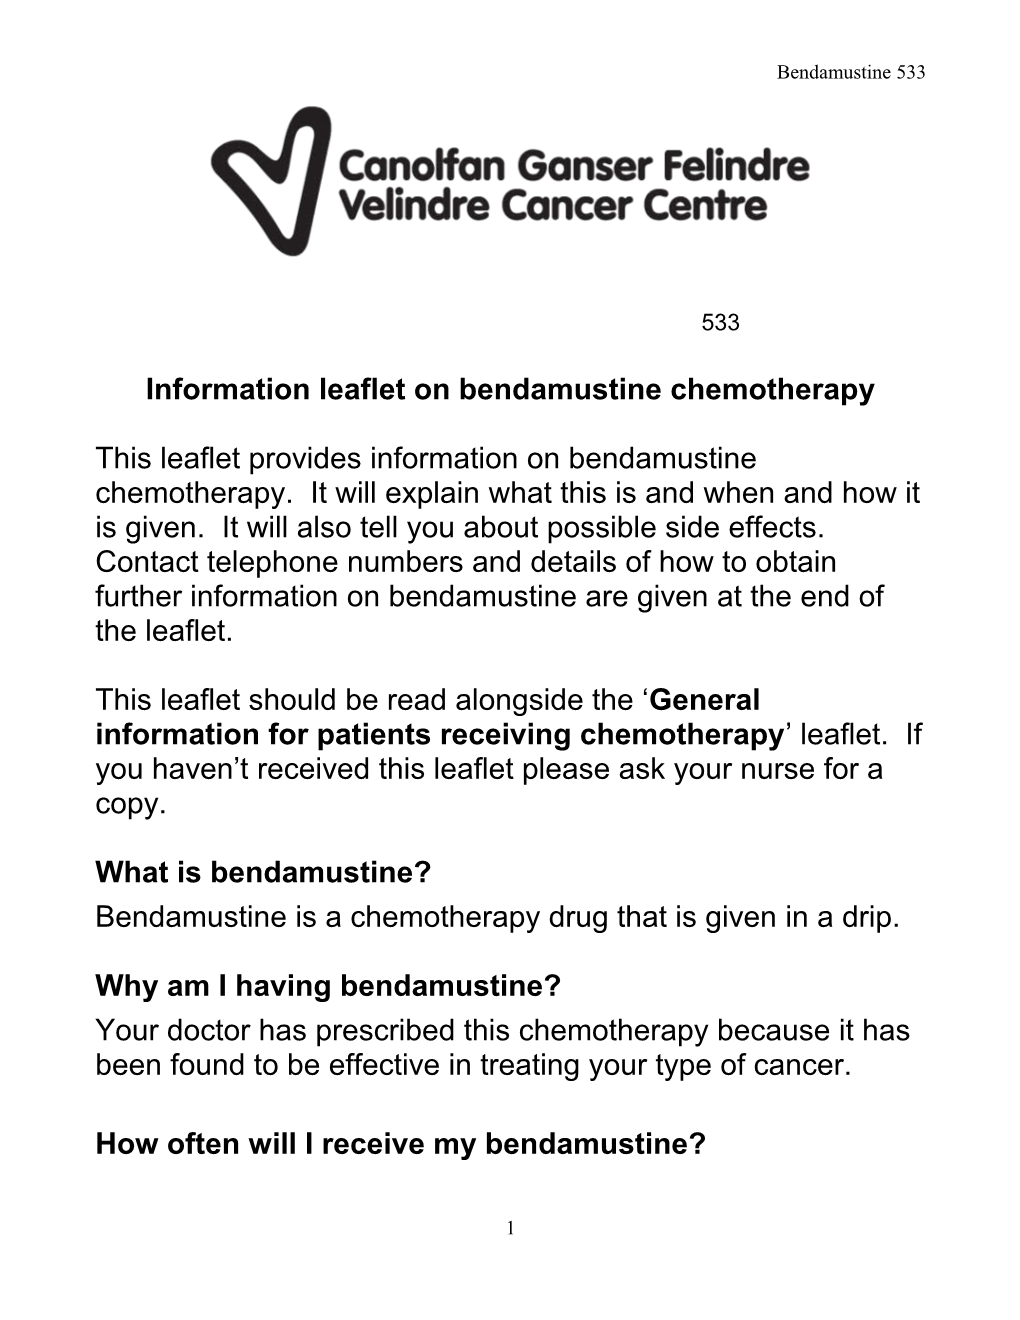 Information Leaflet on Bendamustinechemotherapy